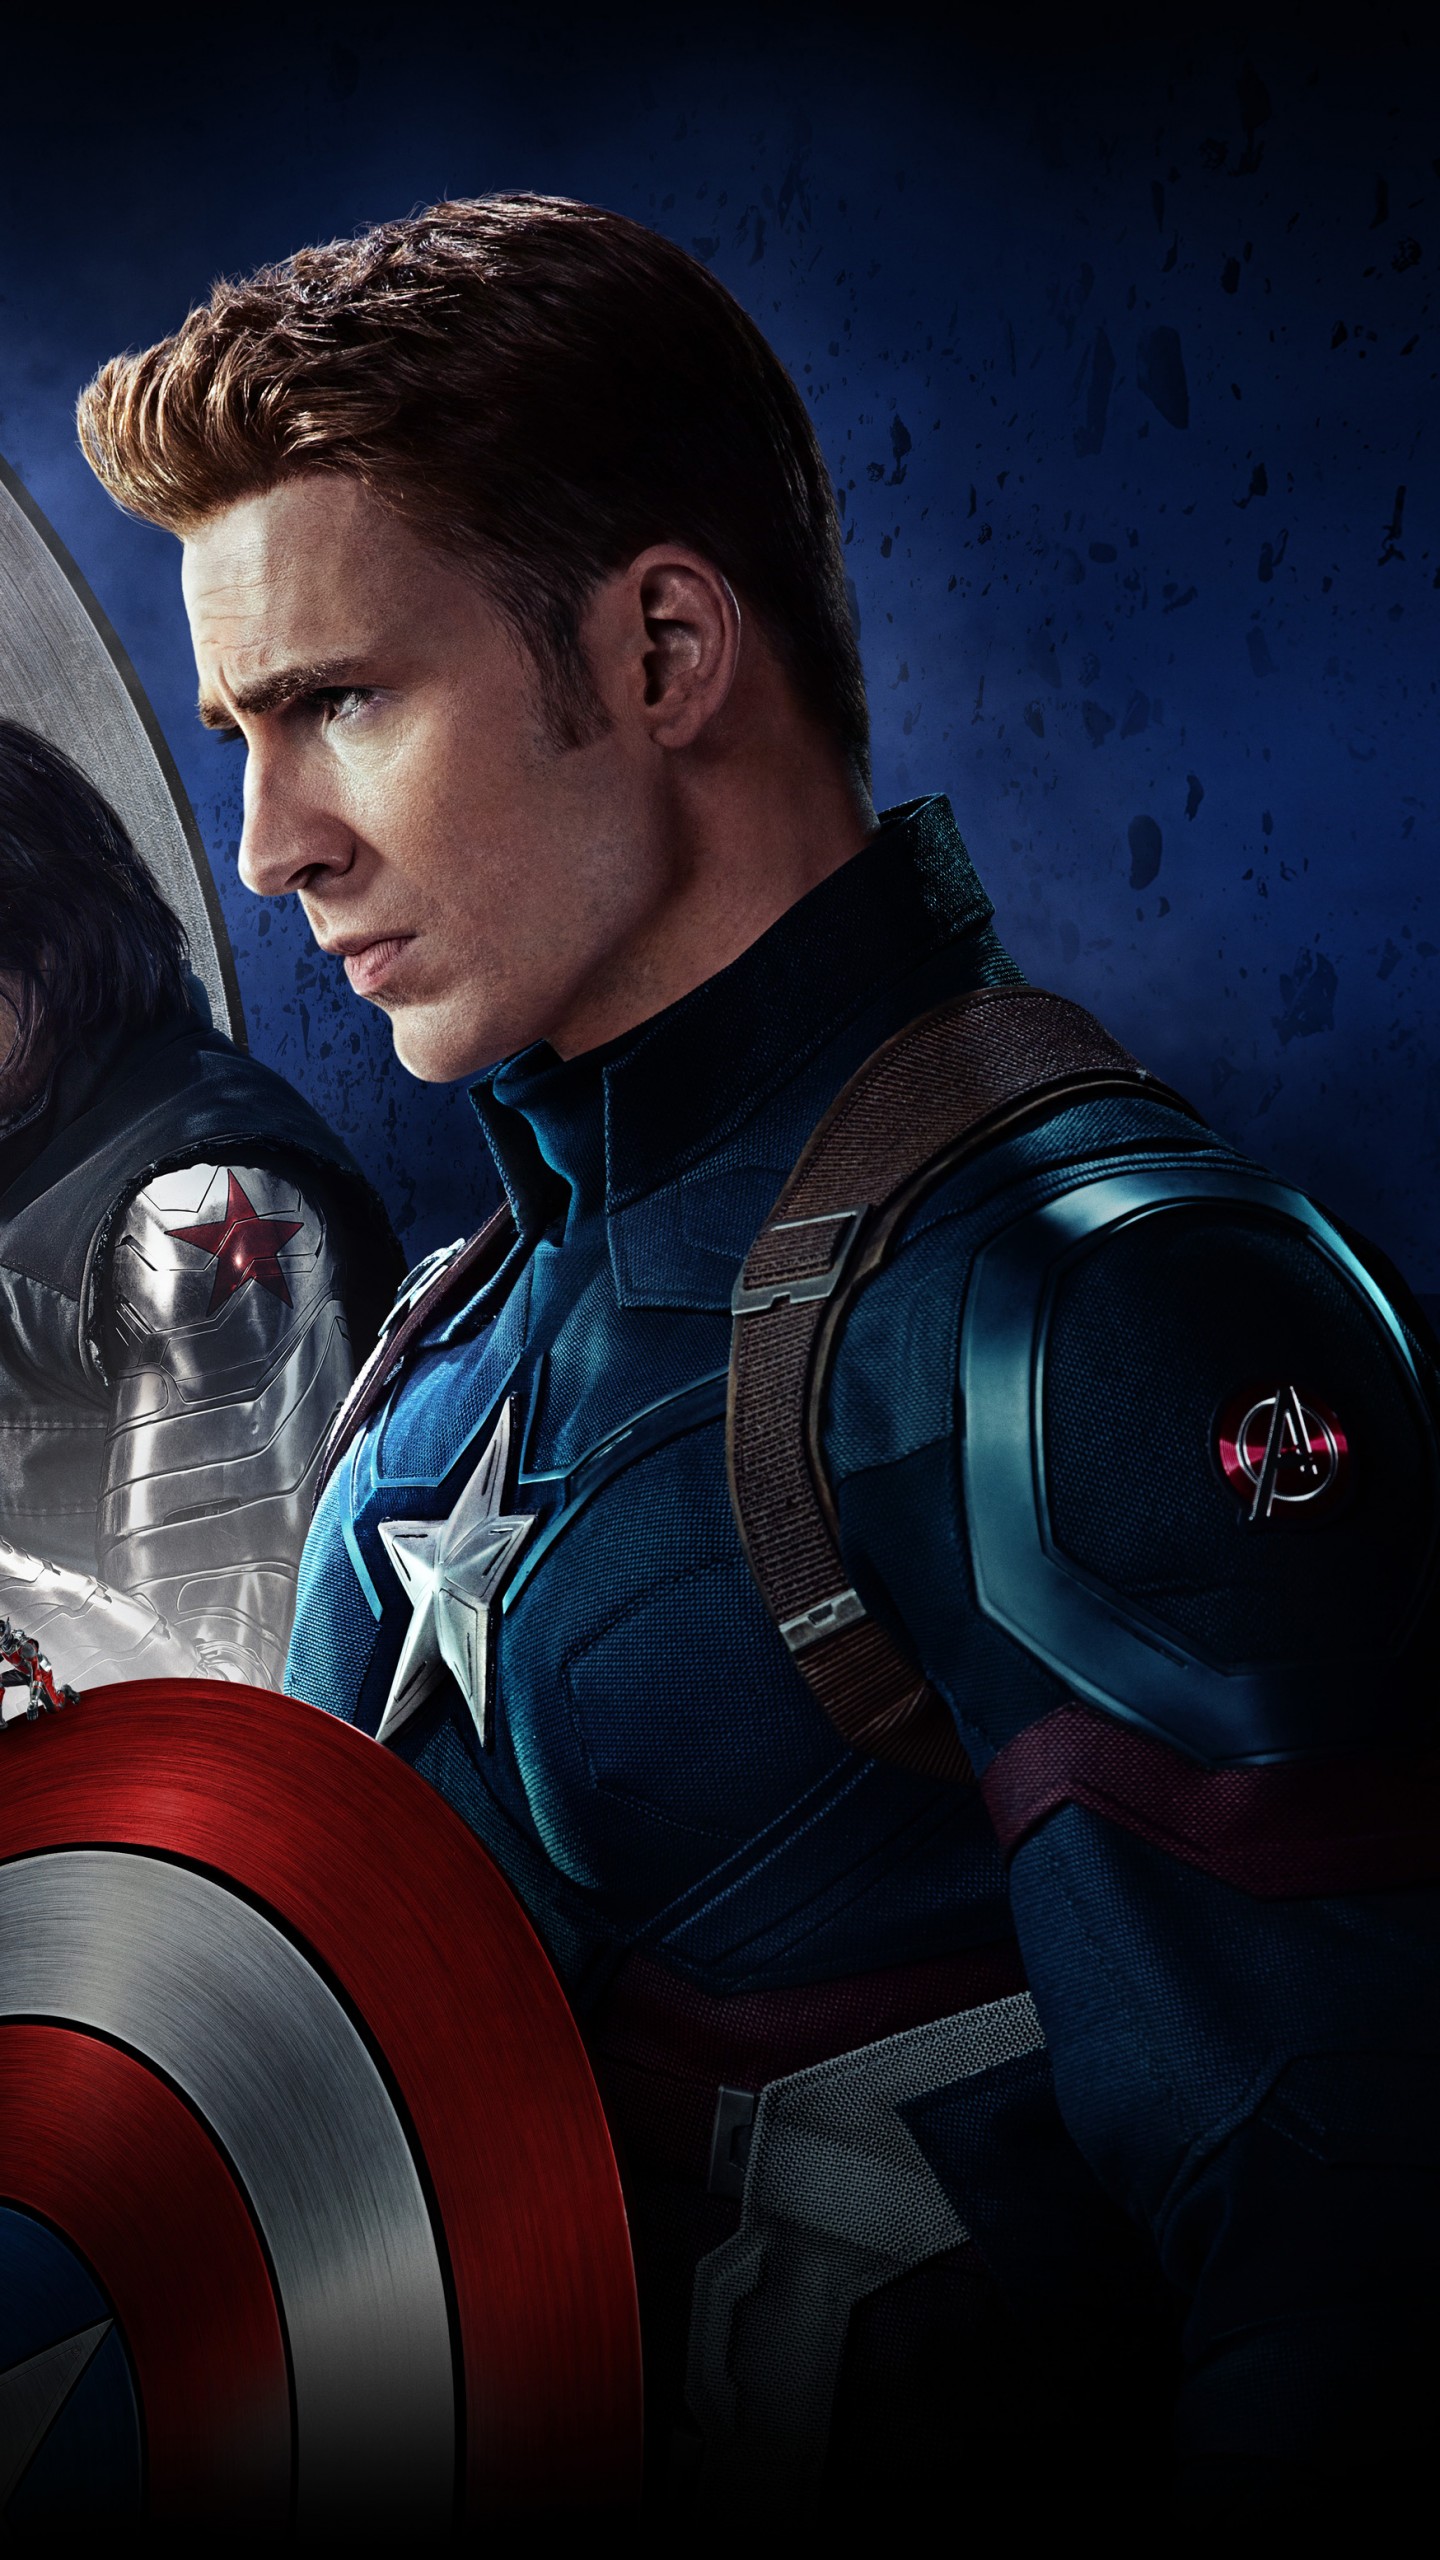 capitão america wallpaper,captain america,superhero,fictional character,hero,movie